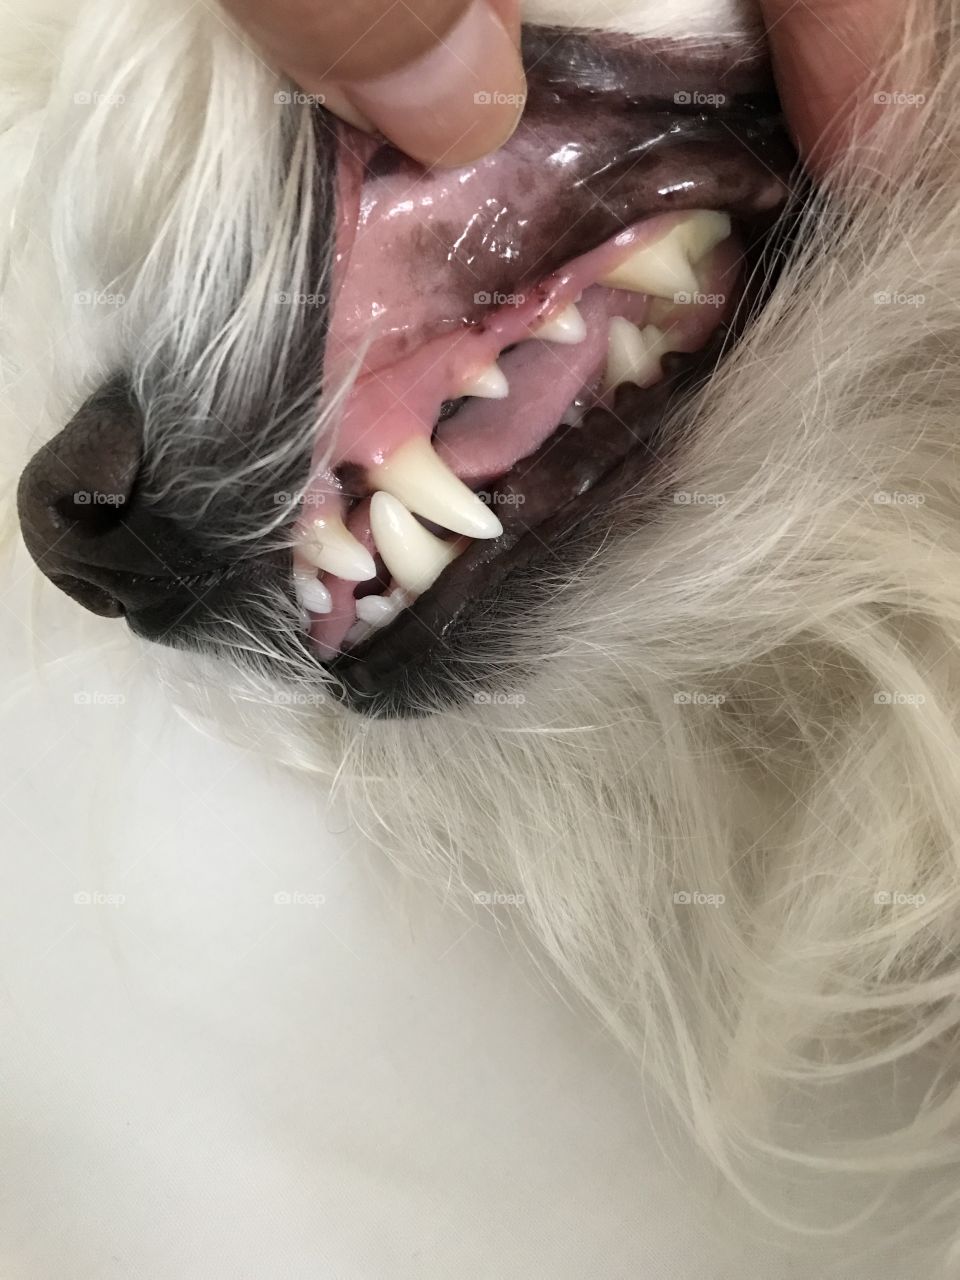 Clean Dog teeth (6 years old) 